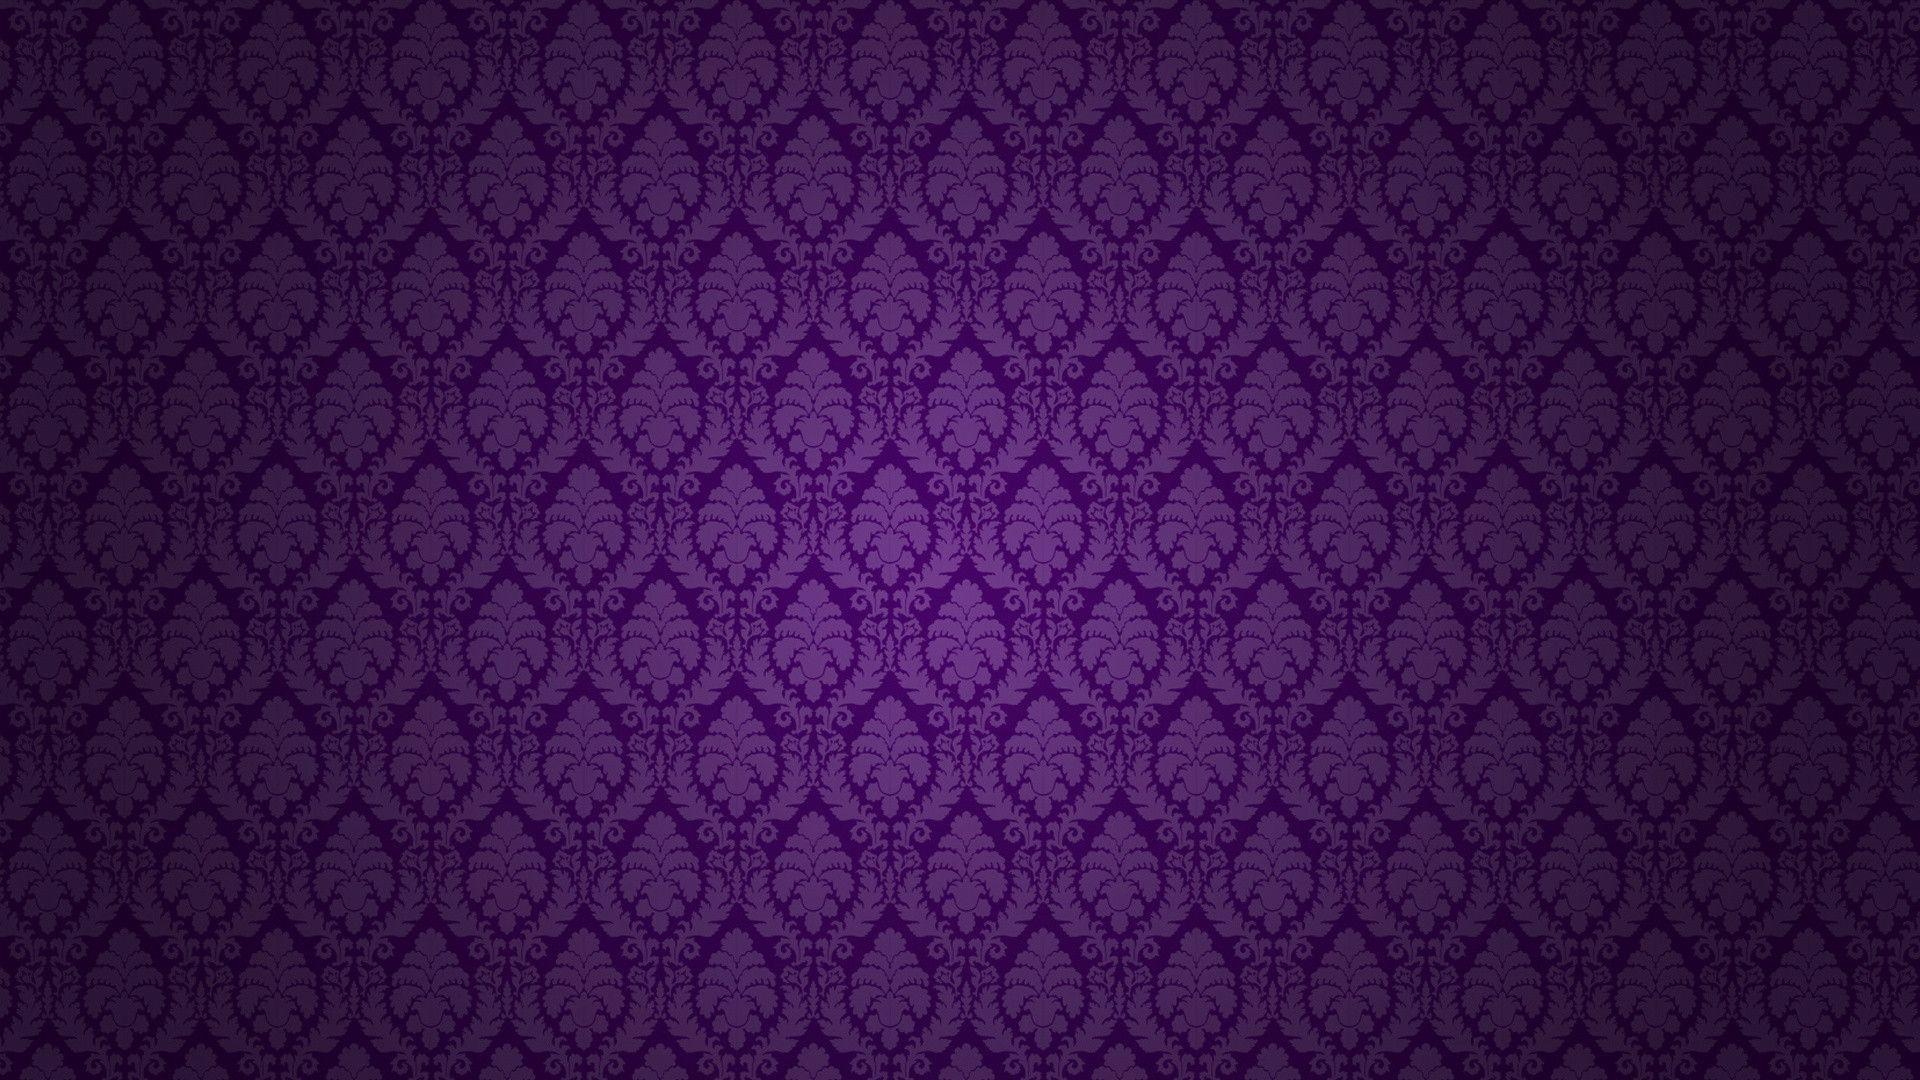 Purple wallpaper image definition high